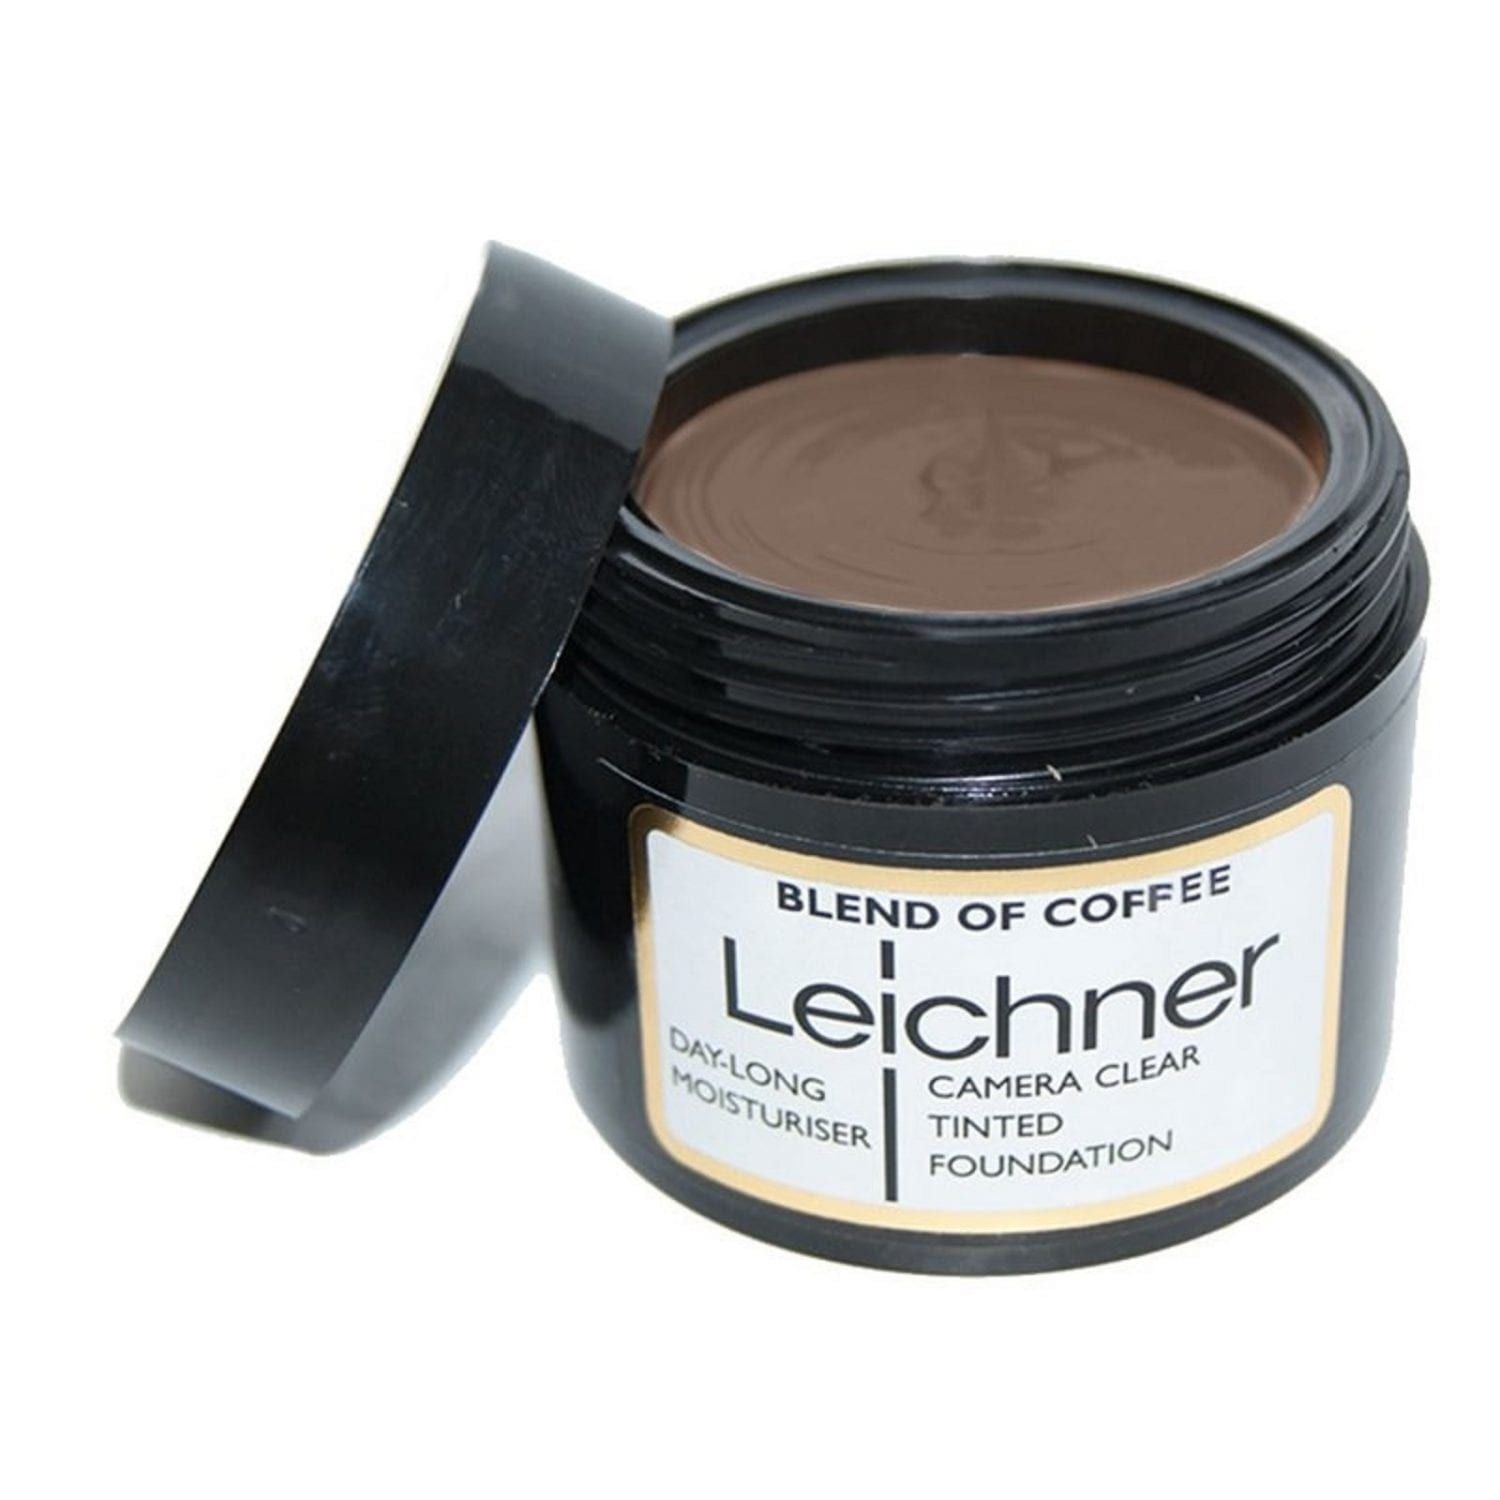 Leichner Camera Clear Foundation Blend Of Coffee | Merthyr Tydfil | Why Not Shop Online